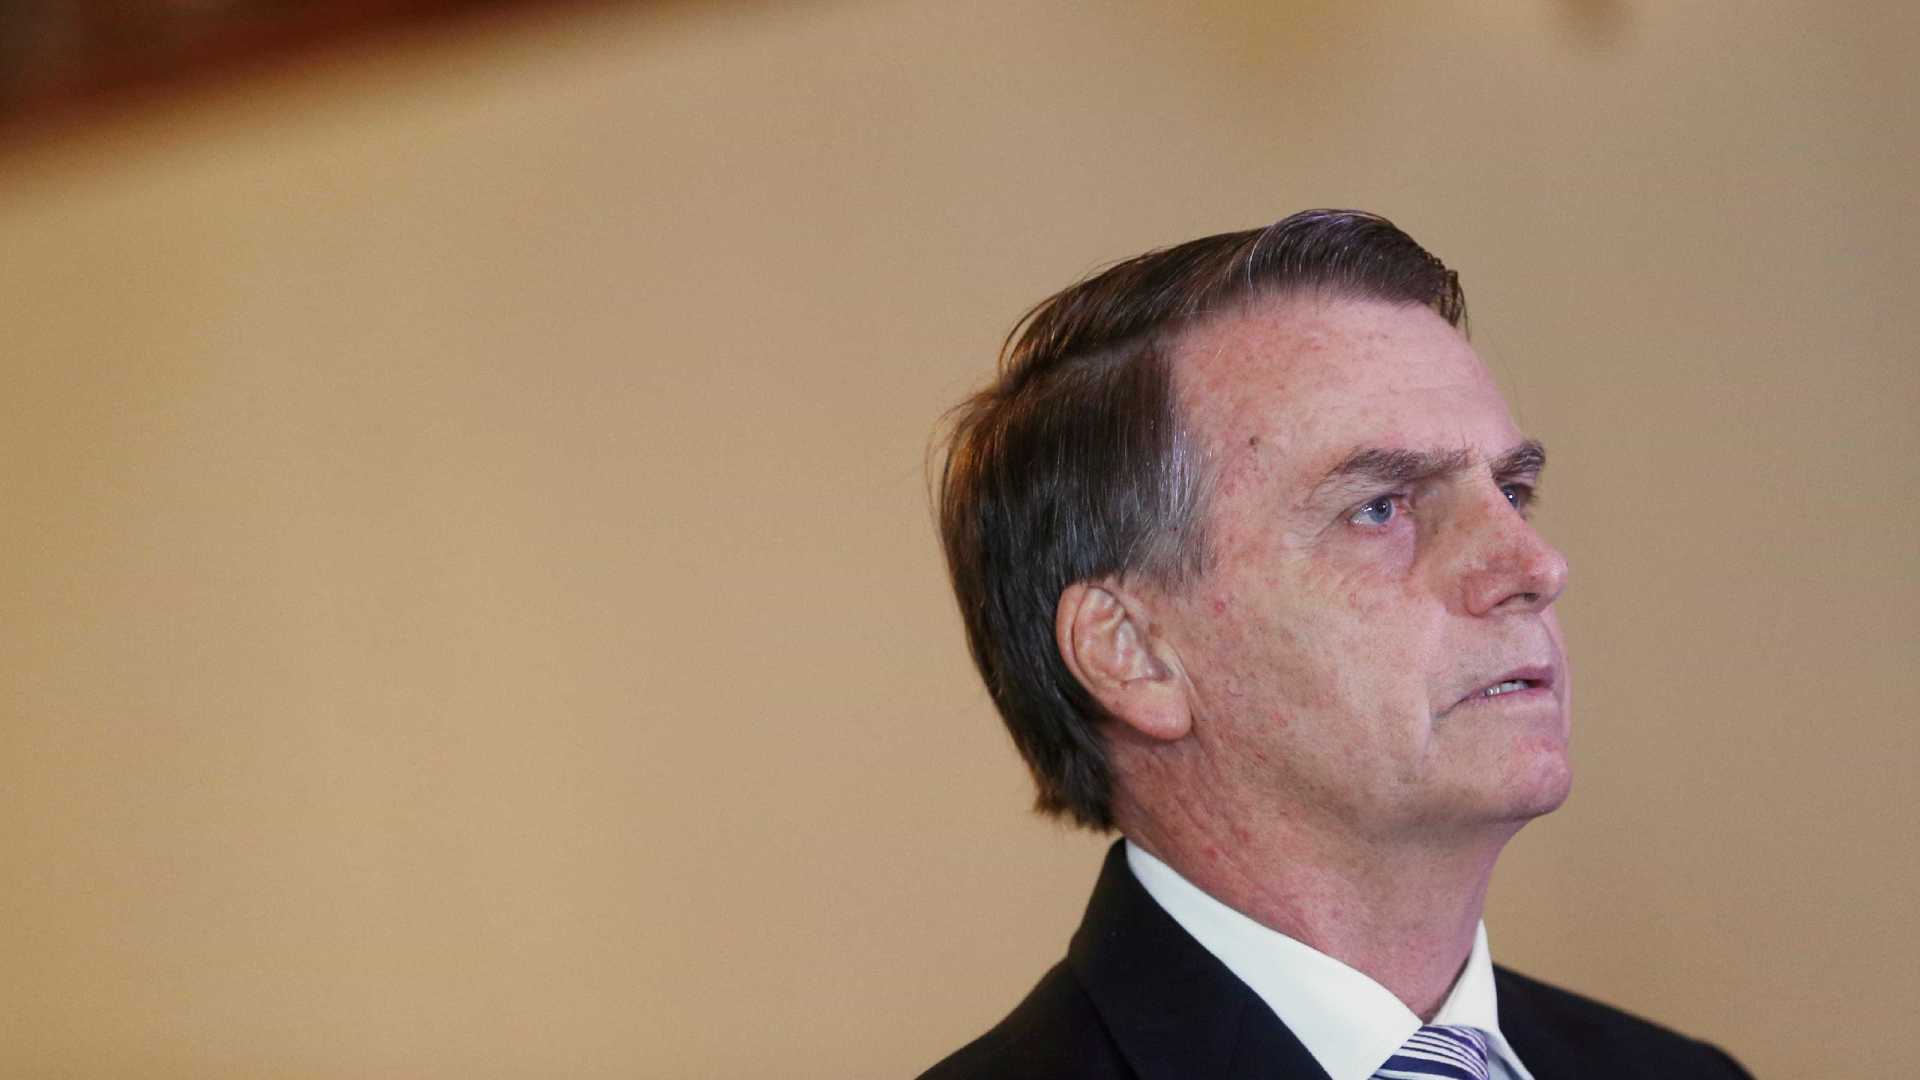 Recuo: Bolsonaro admite 18 pastas; CGU deve ter status de ministério